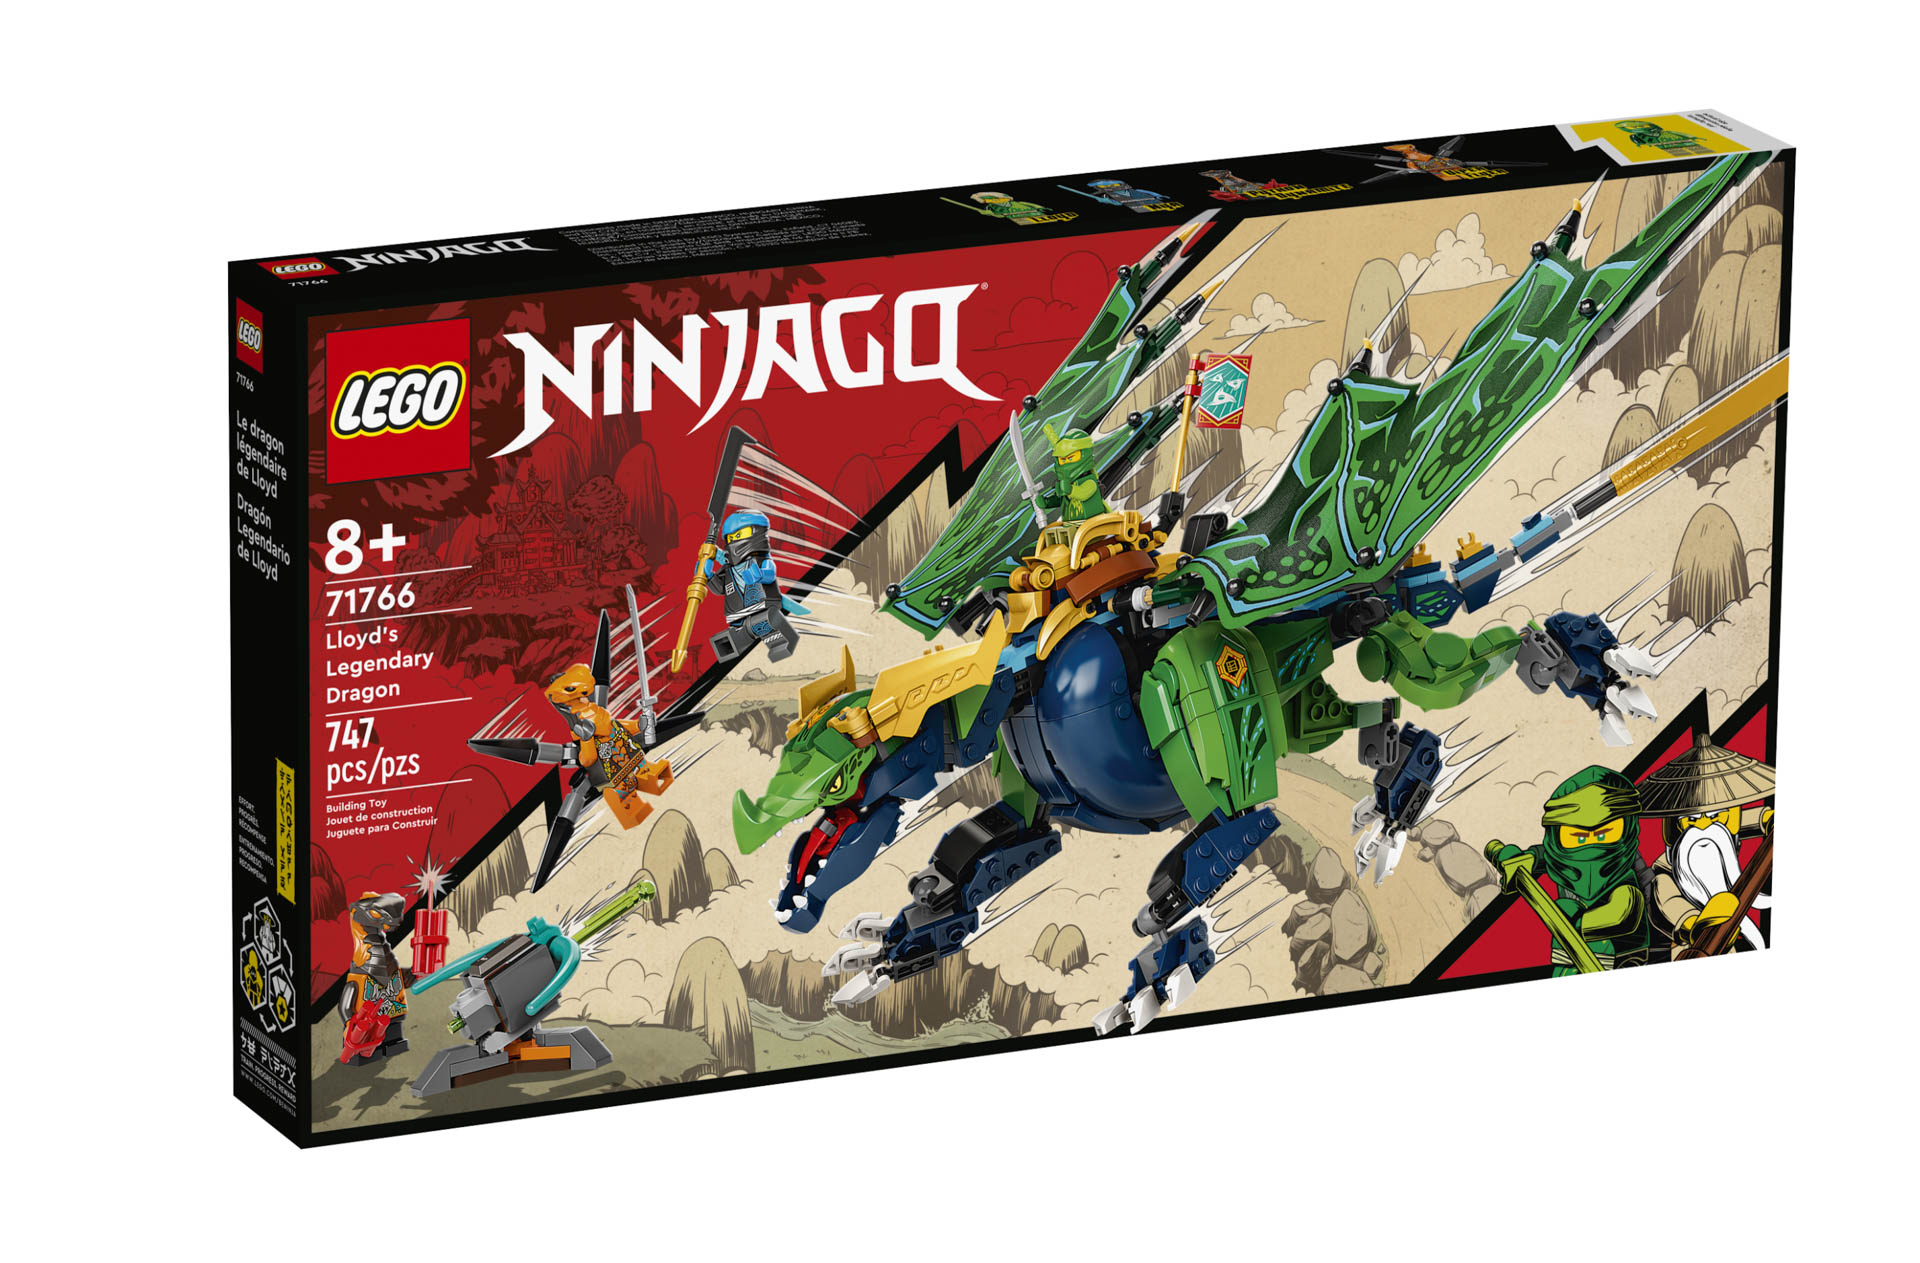 LEGO Ninjago 2022 Releases